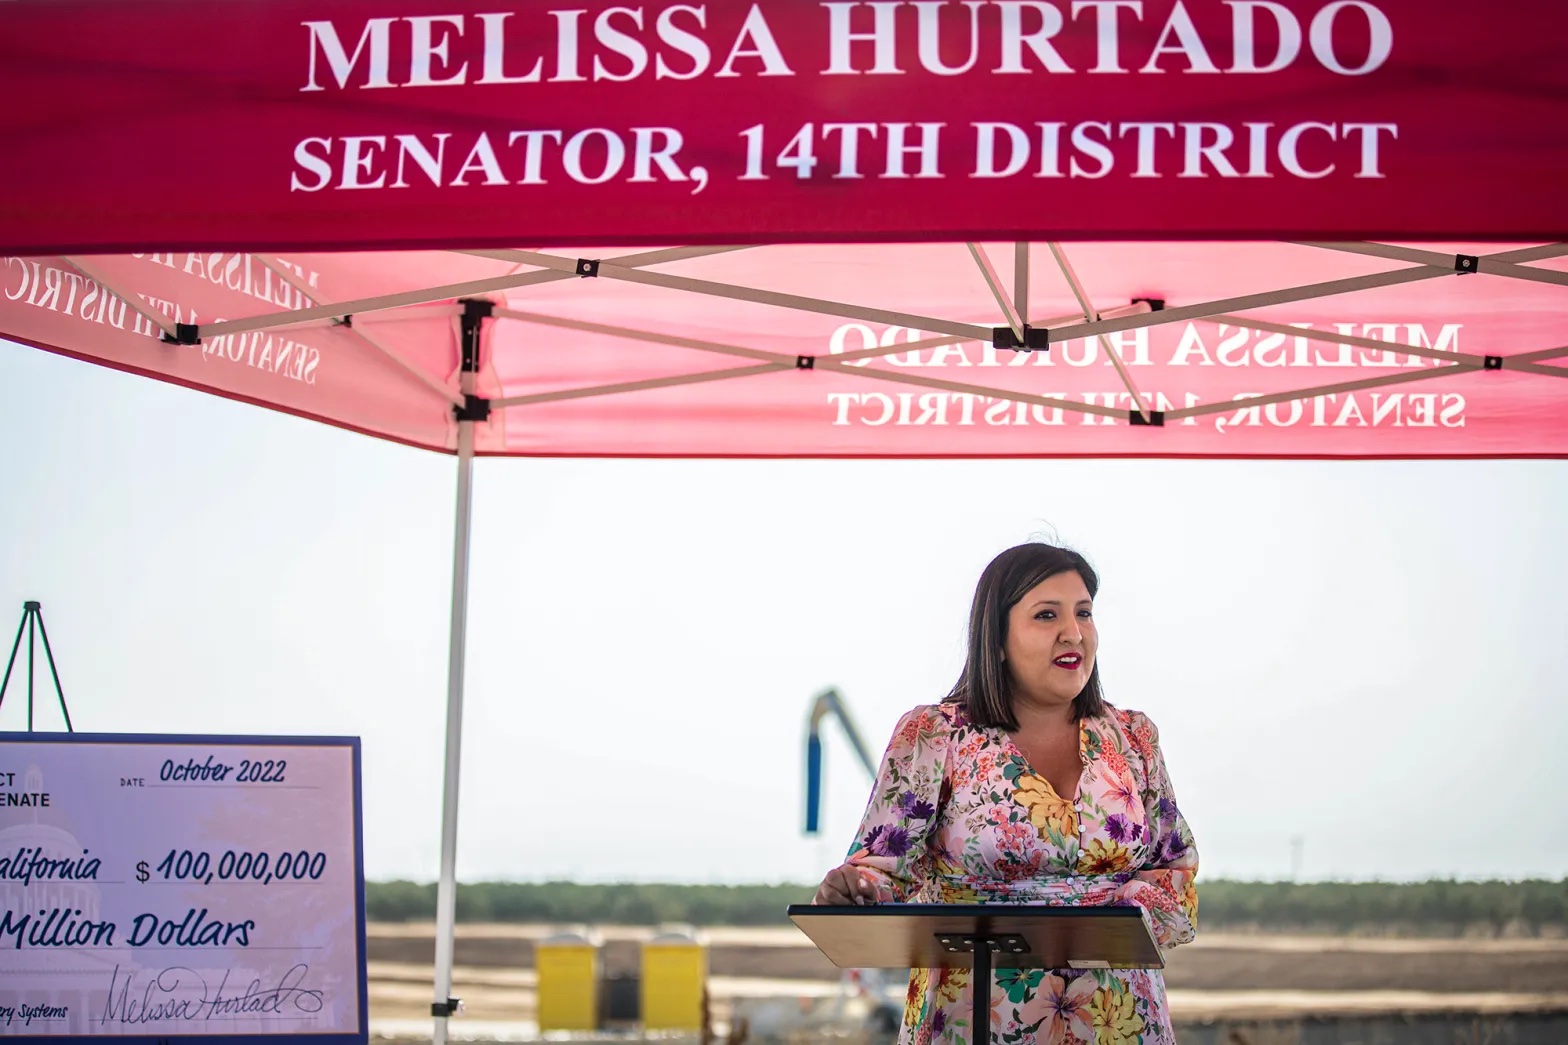 A Latina woman speaks under a fold-up tent that has "Melissa Hurtado, Senator, 14th District" written on it.